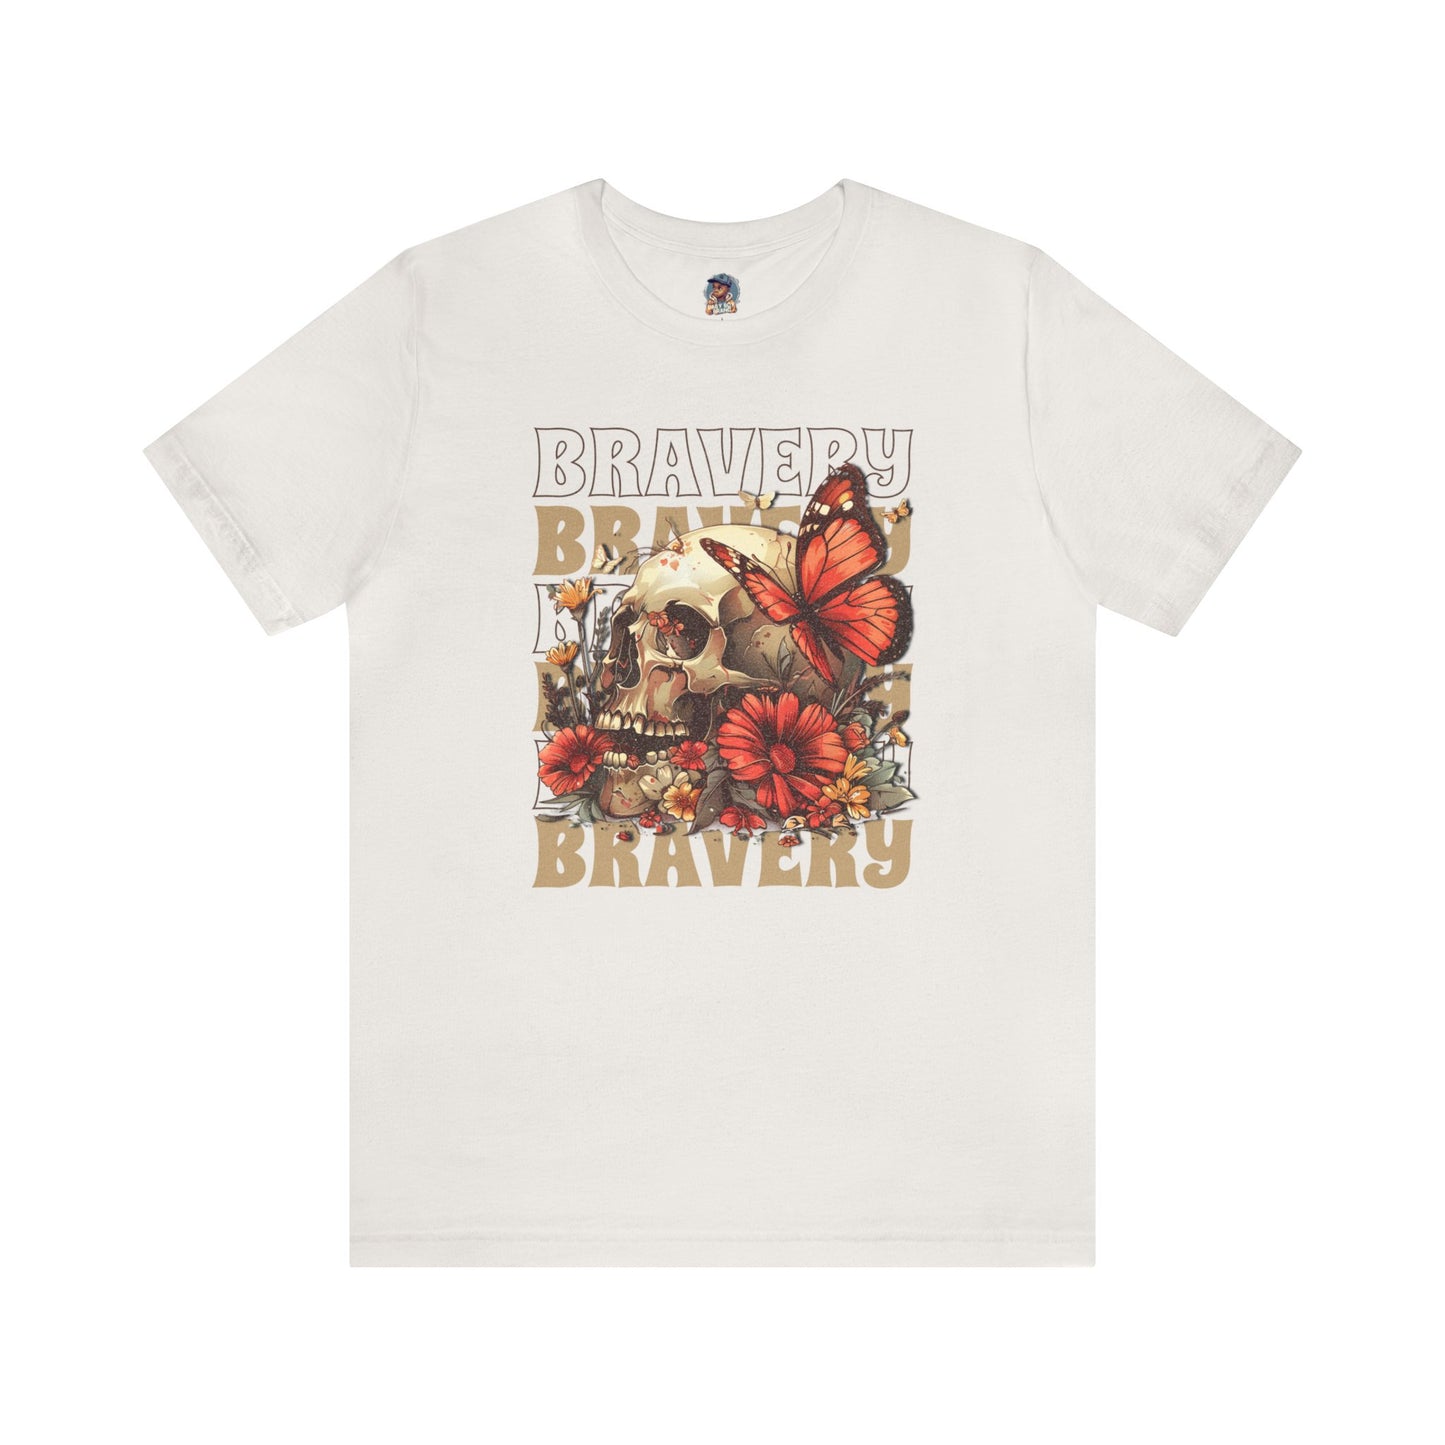 "Bravery T-Shirt"